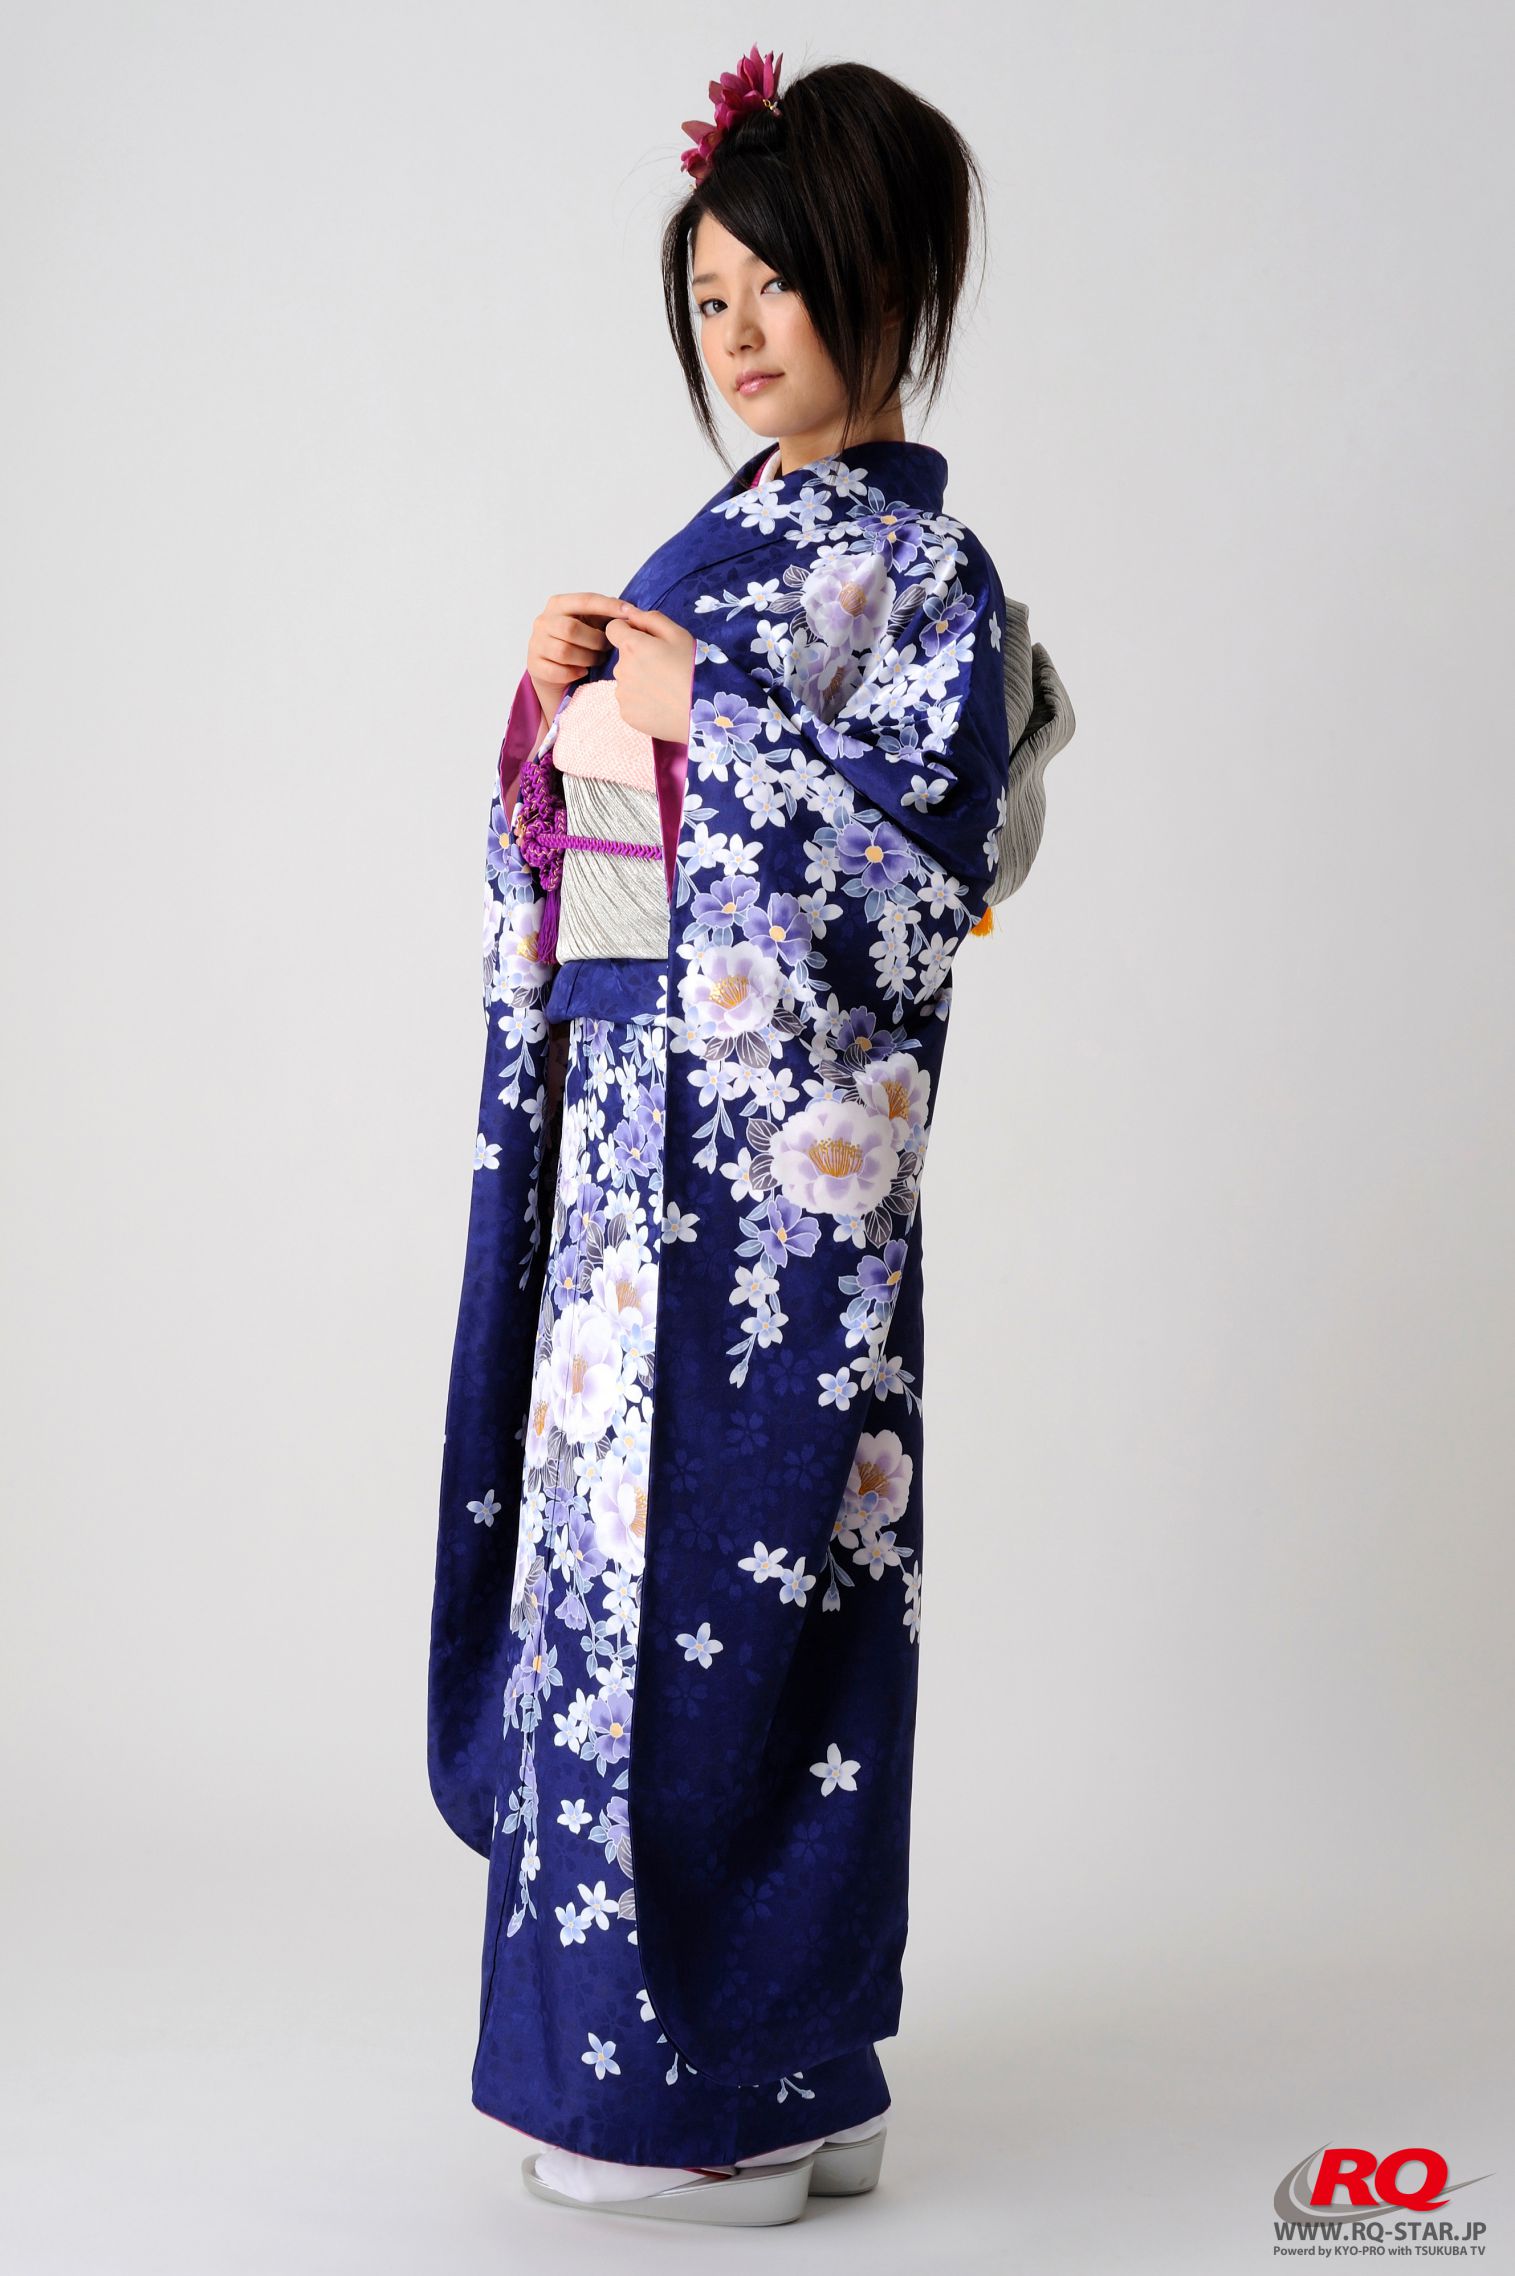 [RQ-STAR] NO.00068 古崎瞳 謹賀新年 Kimono – Happy New Year 和服系列72